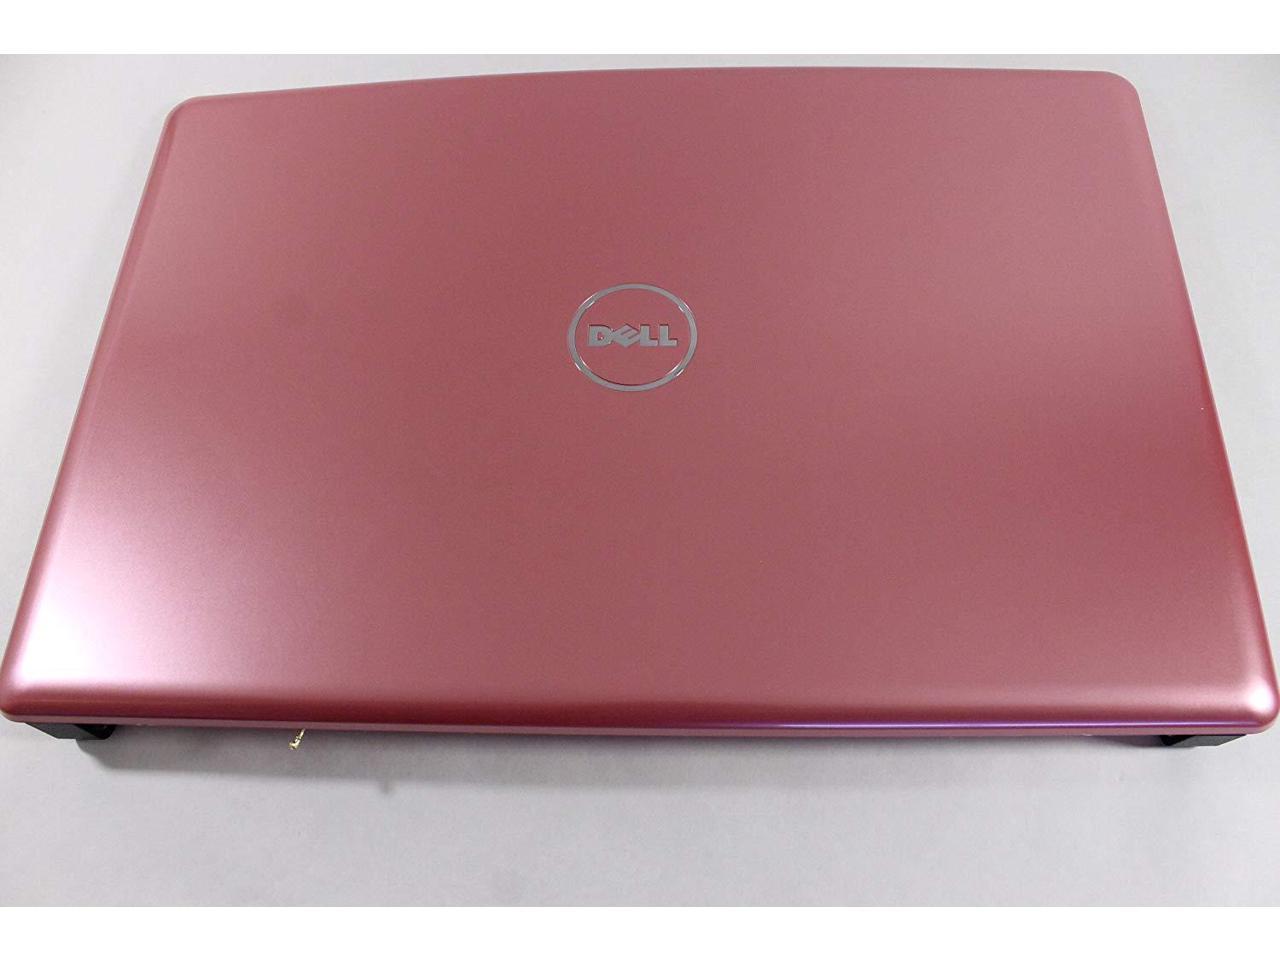 Dell LED HKGDC Pink Back Cover Inspiron 1750 